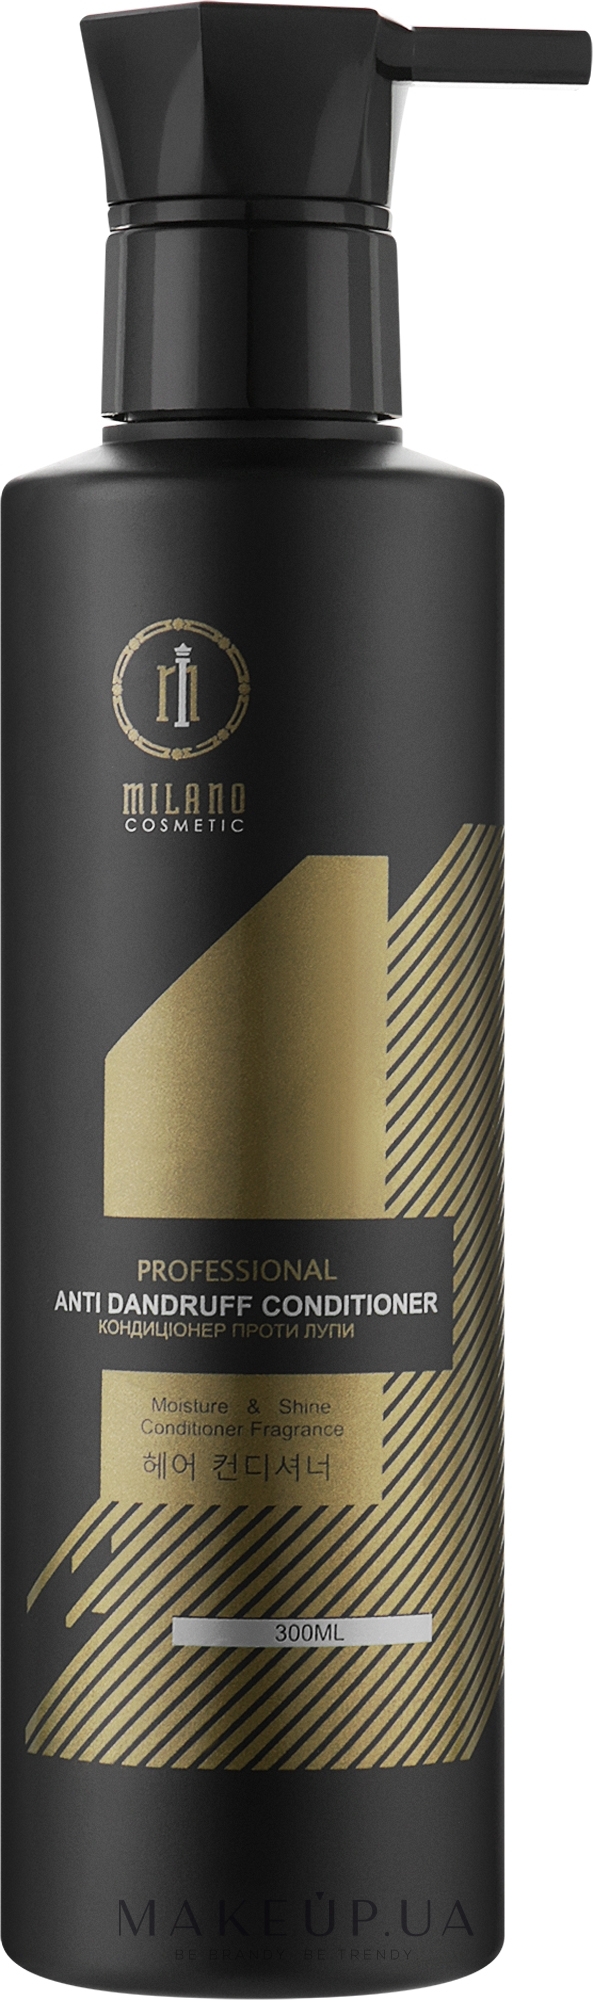 Кондиционер для волос против перхоти - Milano Cosmetic Professional Anti Dandruff Conditioner — фото 300ml